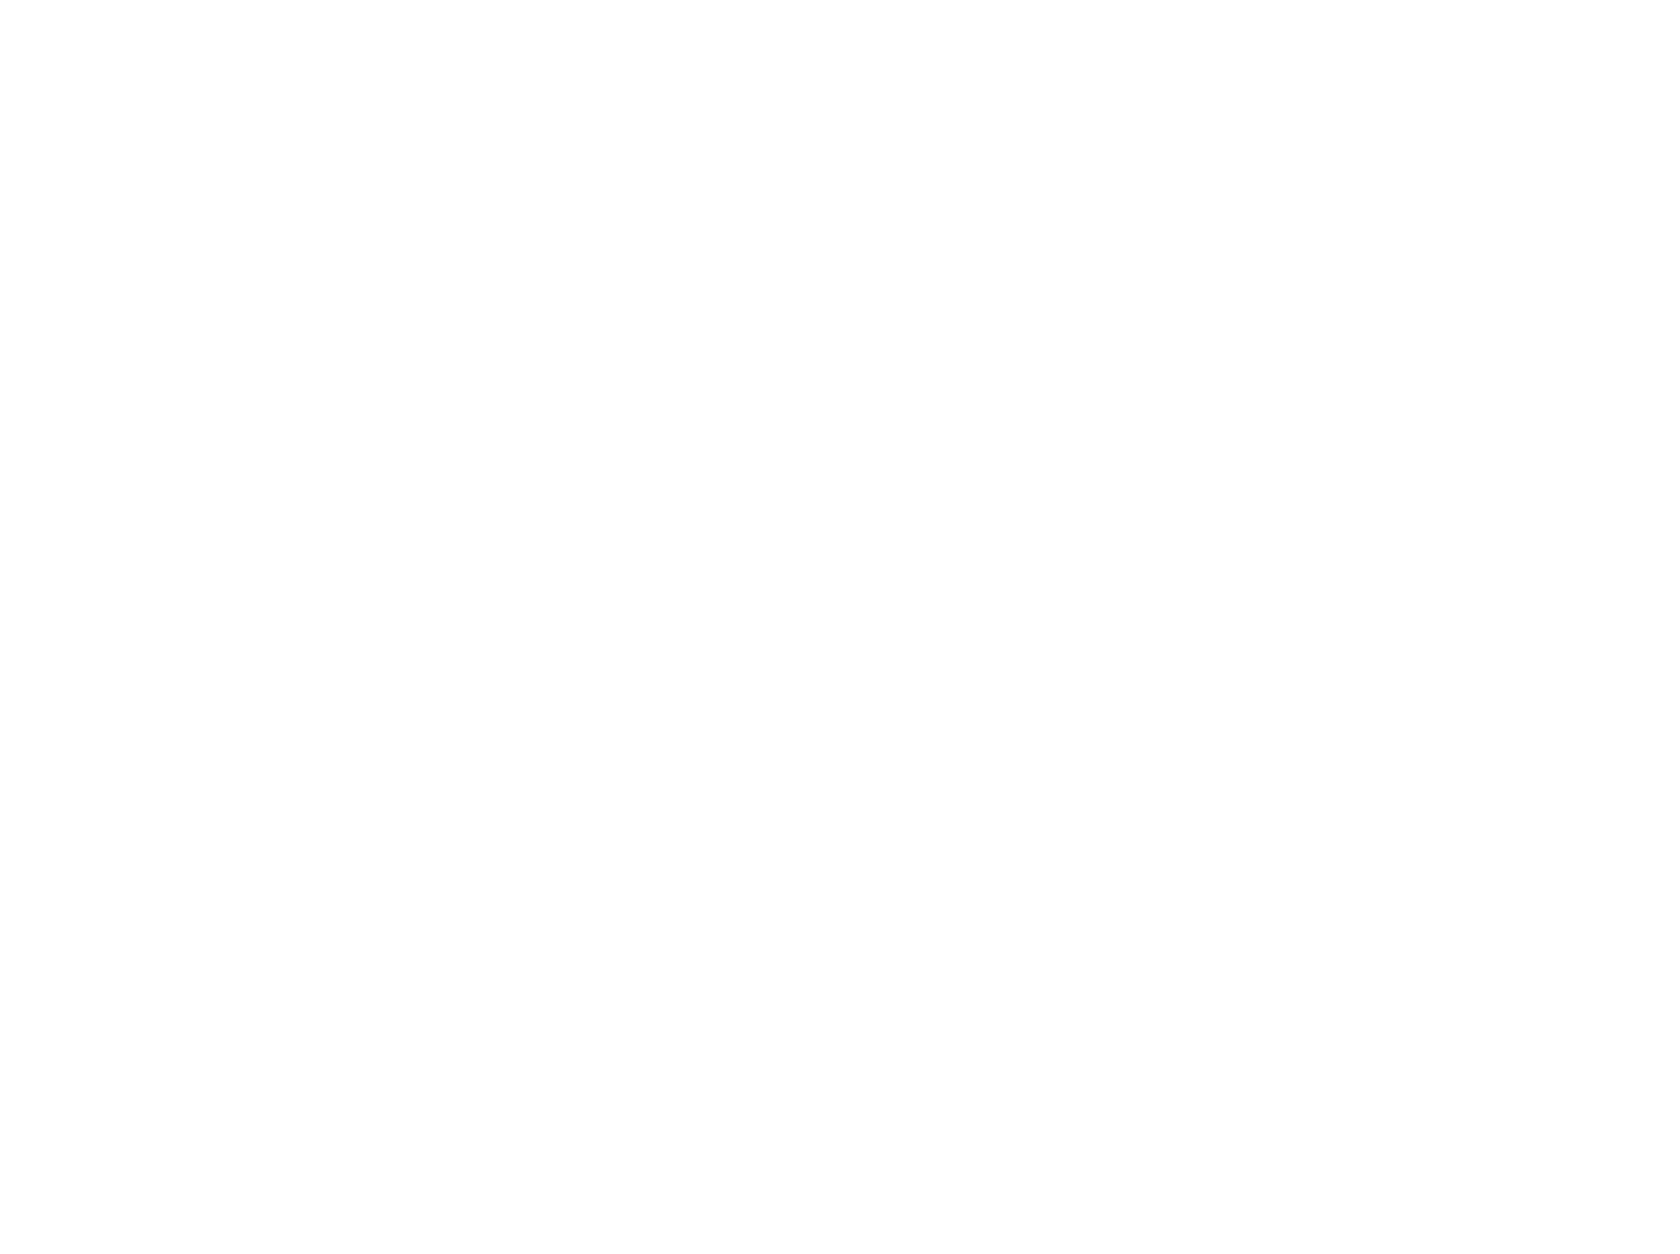 Съемки резидента Городского бизнес-инкубатора (ООО Меринос, производство обуви), канал ВГТРК, 2012 год 